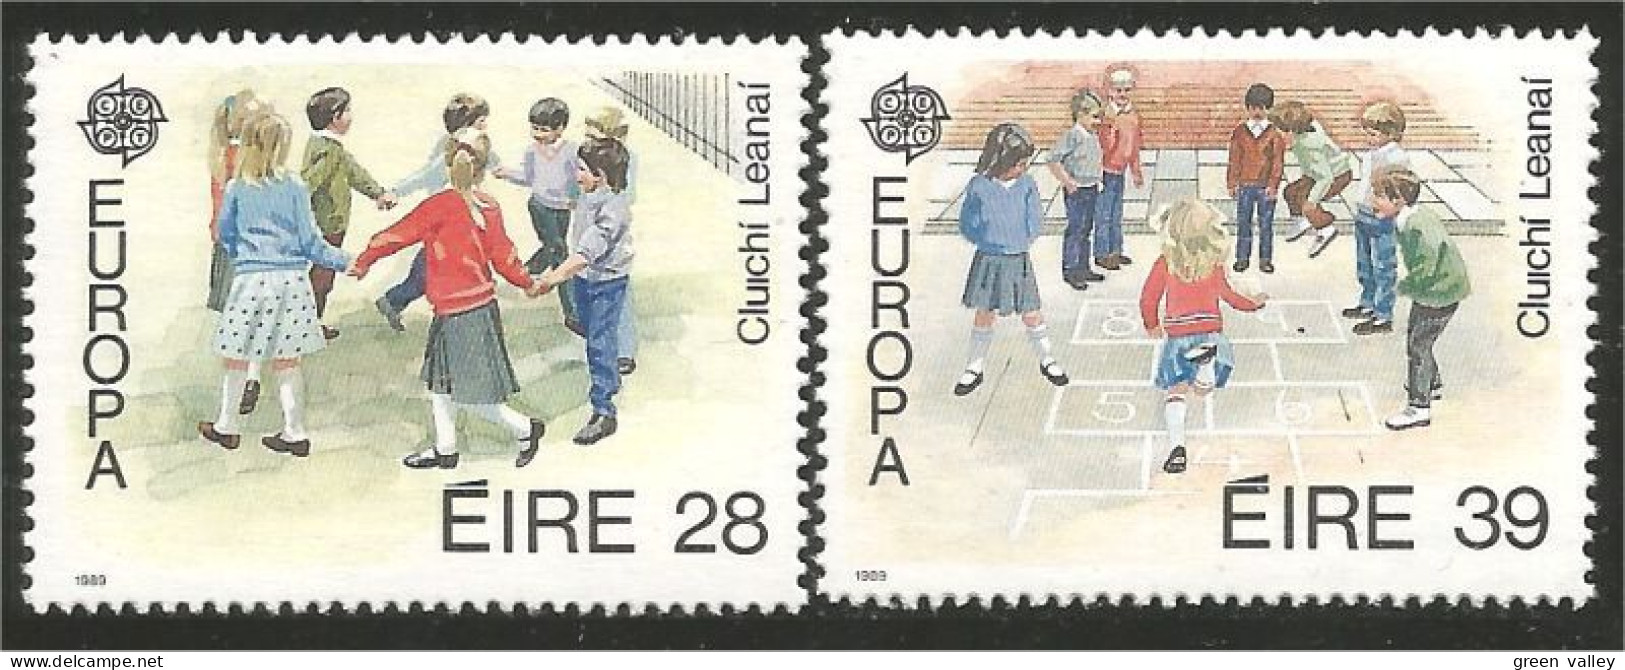 EU89-5c EUROPA-CEPT 1989 Irlande Jeux Enfants Children Games Kinderspiele MNH ** Neuf SC - Unclassified